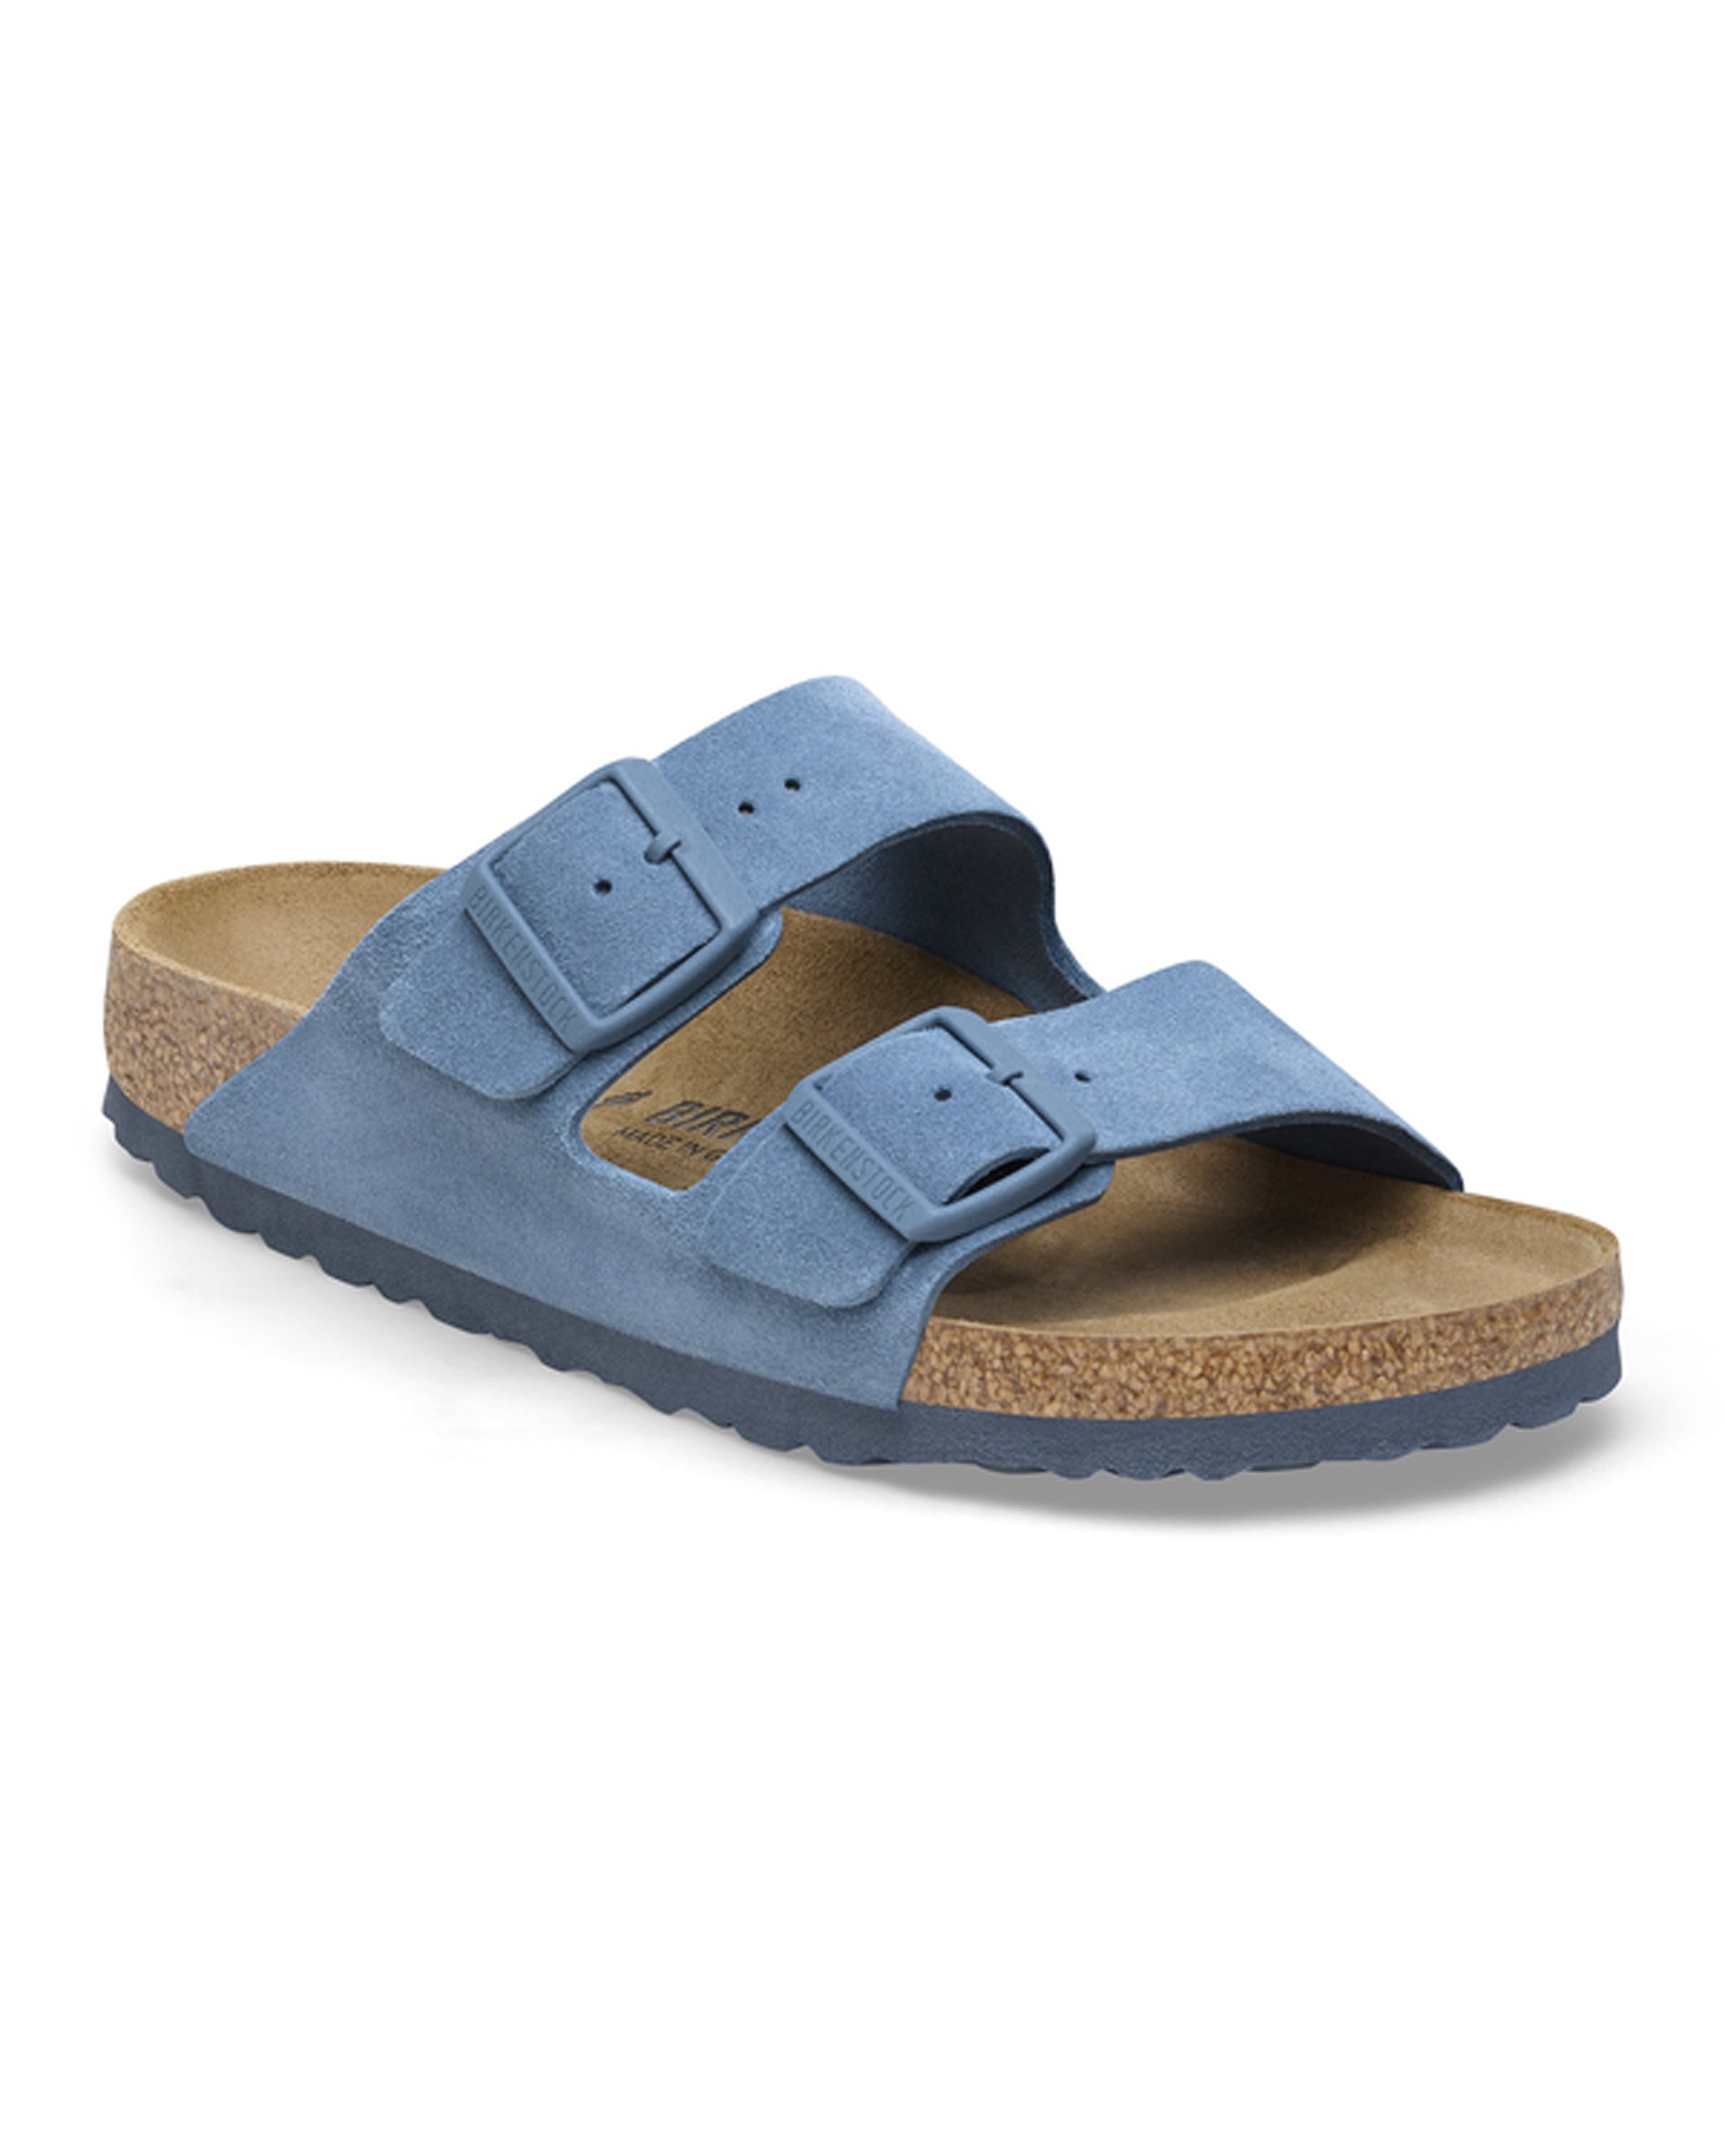 Arizona Elemental Blue Suede Leather Sandals